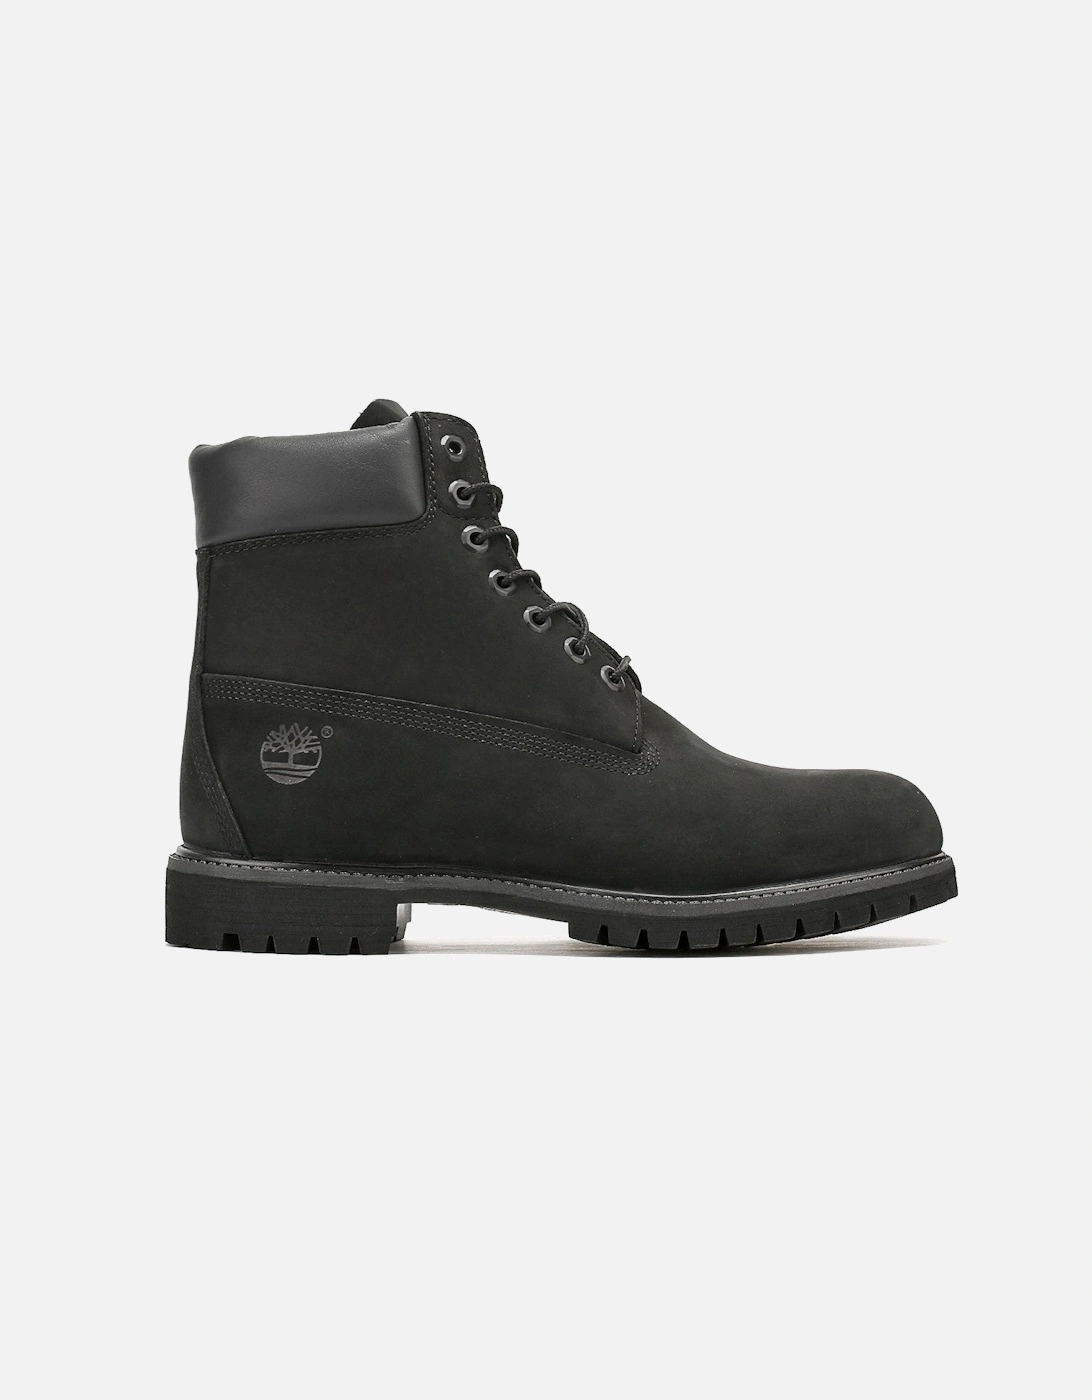 Mens Black Premium 6 Inch Nubuck Leather Boots